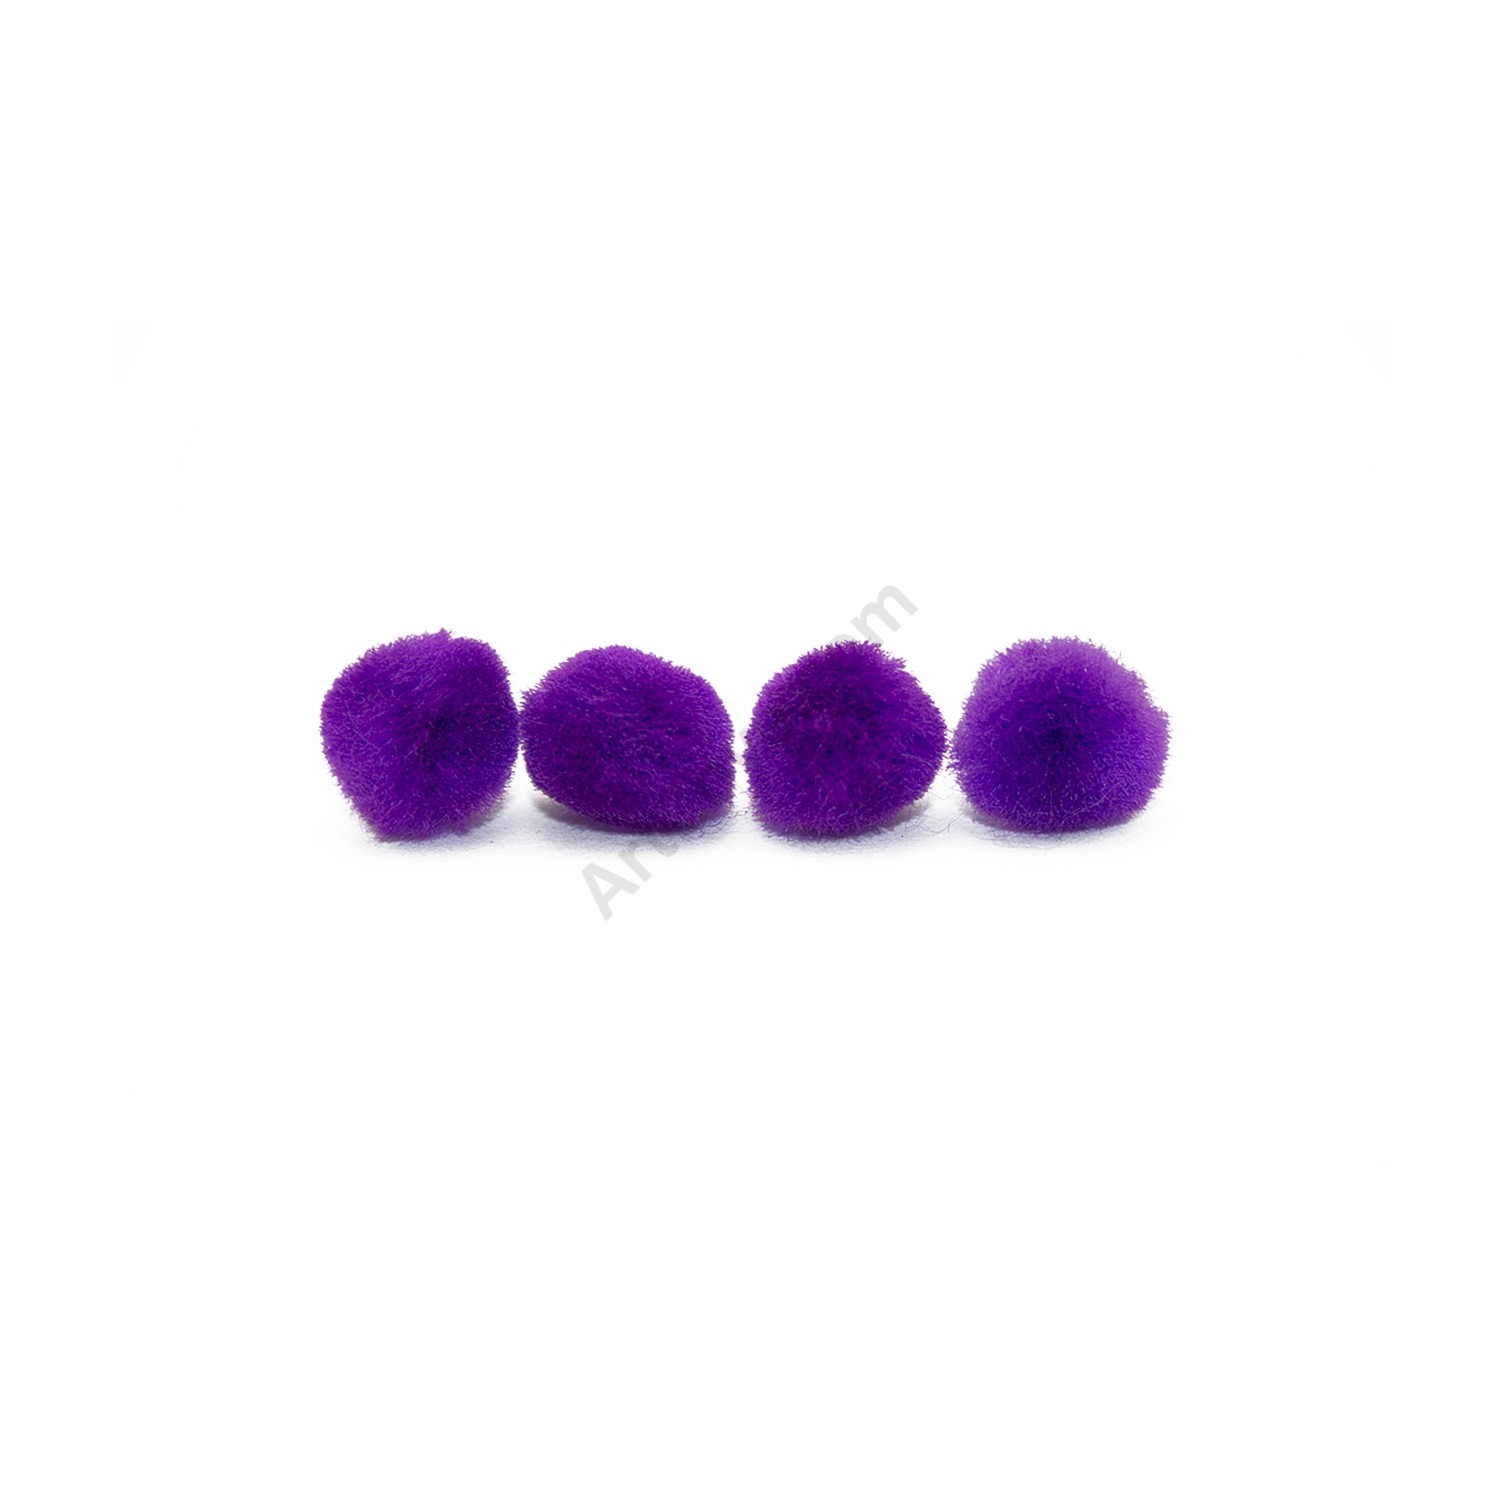 Small Craft Pom Poms for Arts and Crafts 100 pcs Purple Size 1/4 Pom Poms